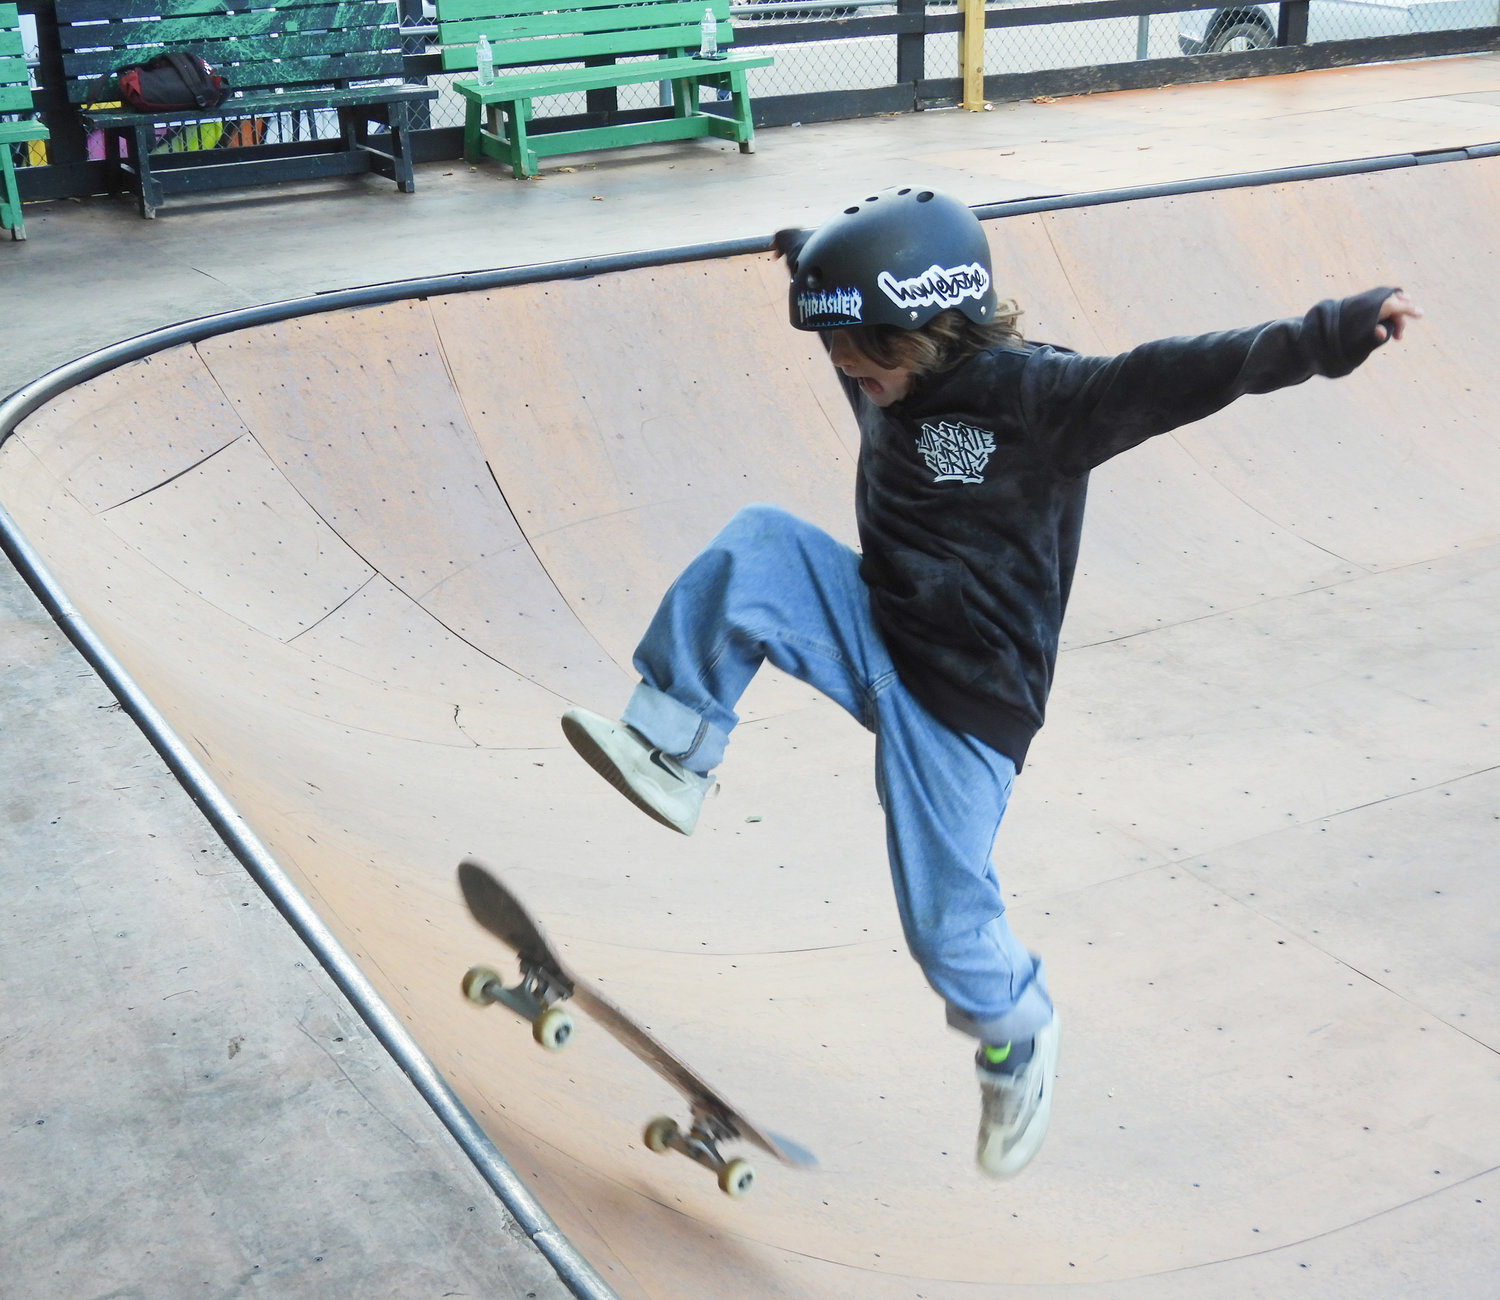 10-year-old Oliver Kutik of Cazenovia shreds the bowl at Lenox Skate Park on Saturday, Sept. 24